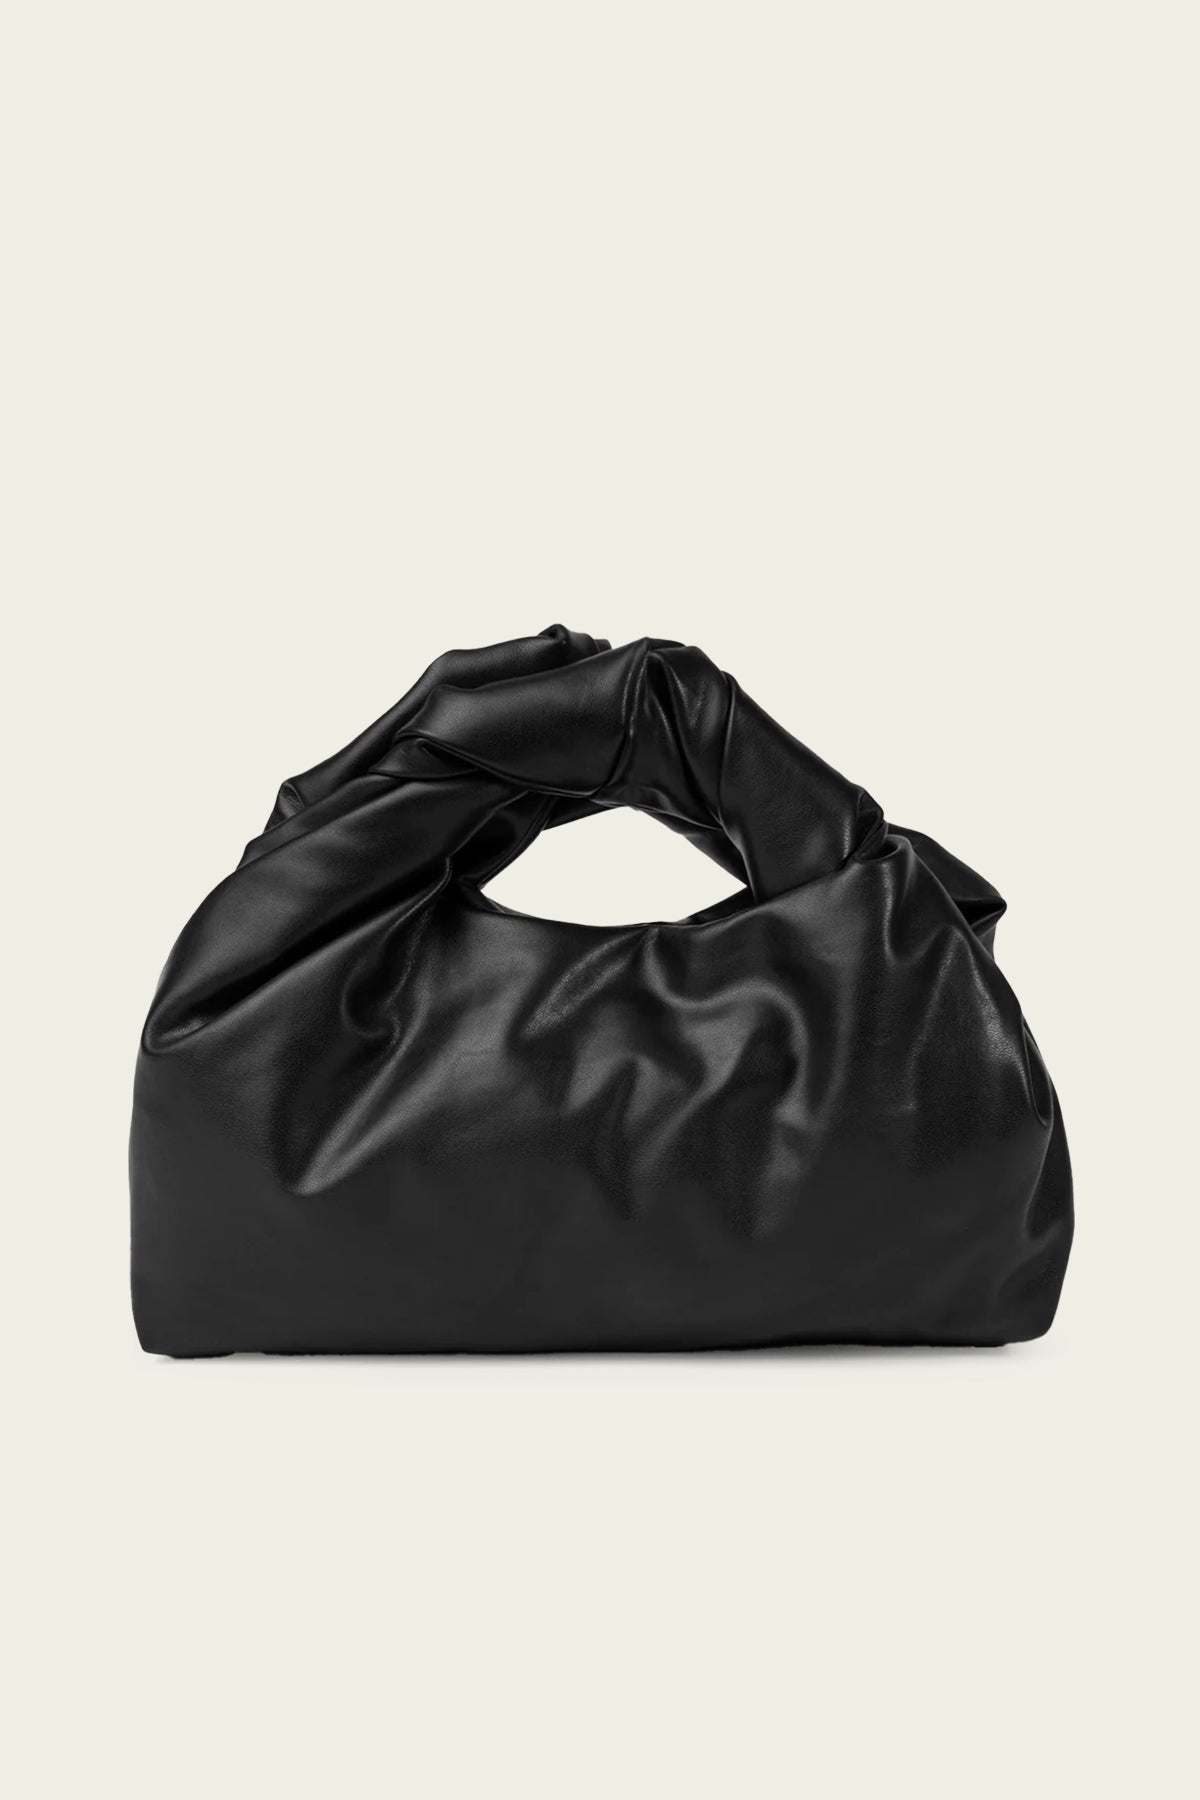 Paloma Vegan Leather Bag in Black - shop-olivia.com